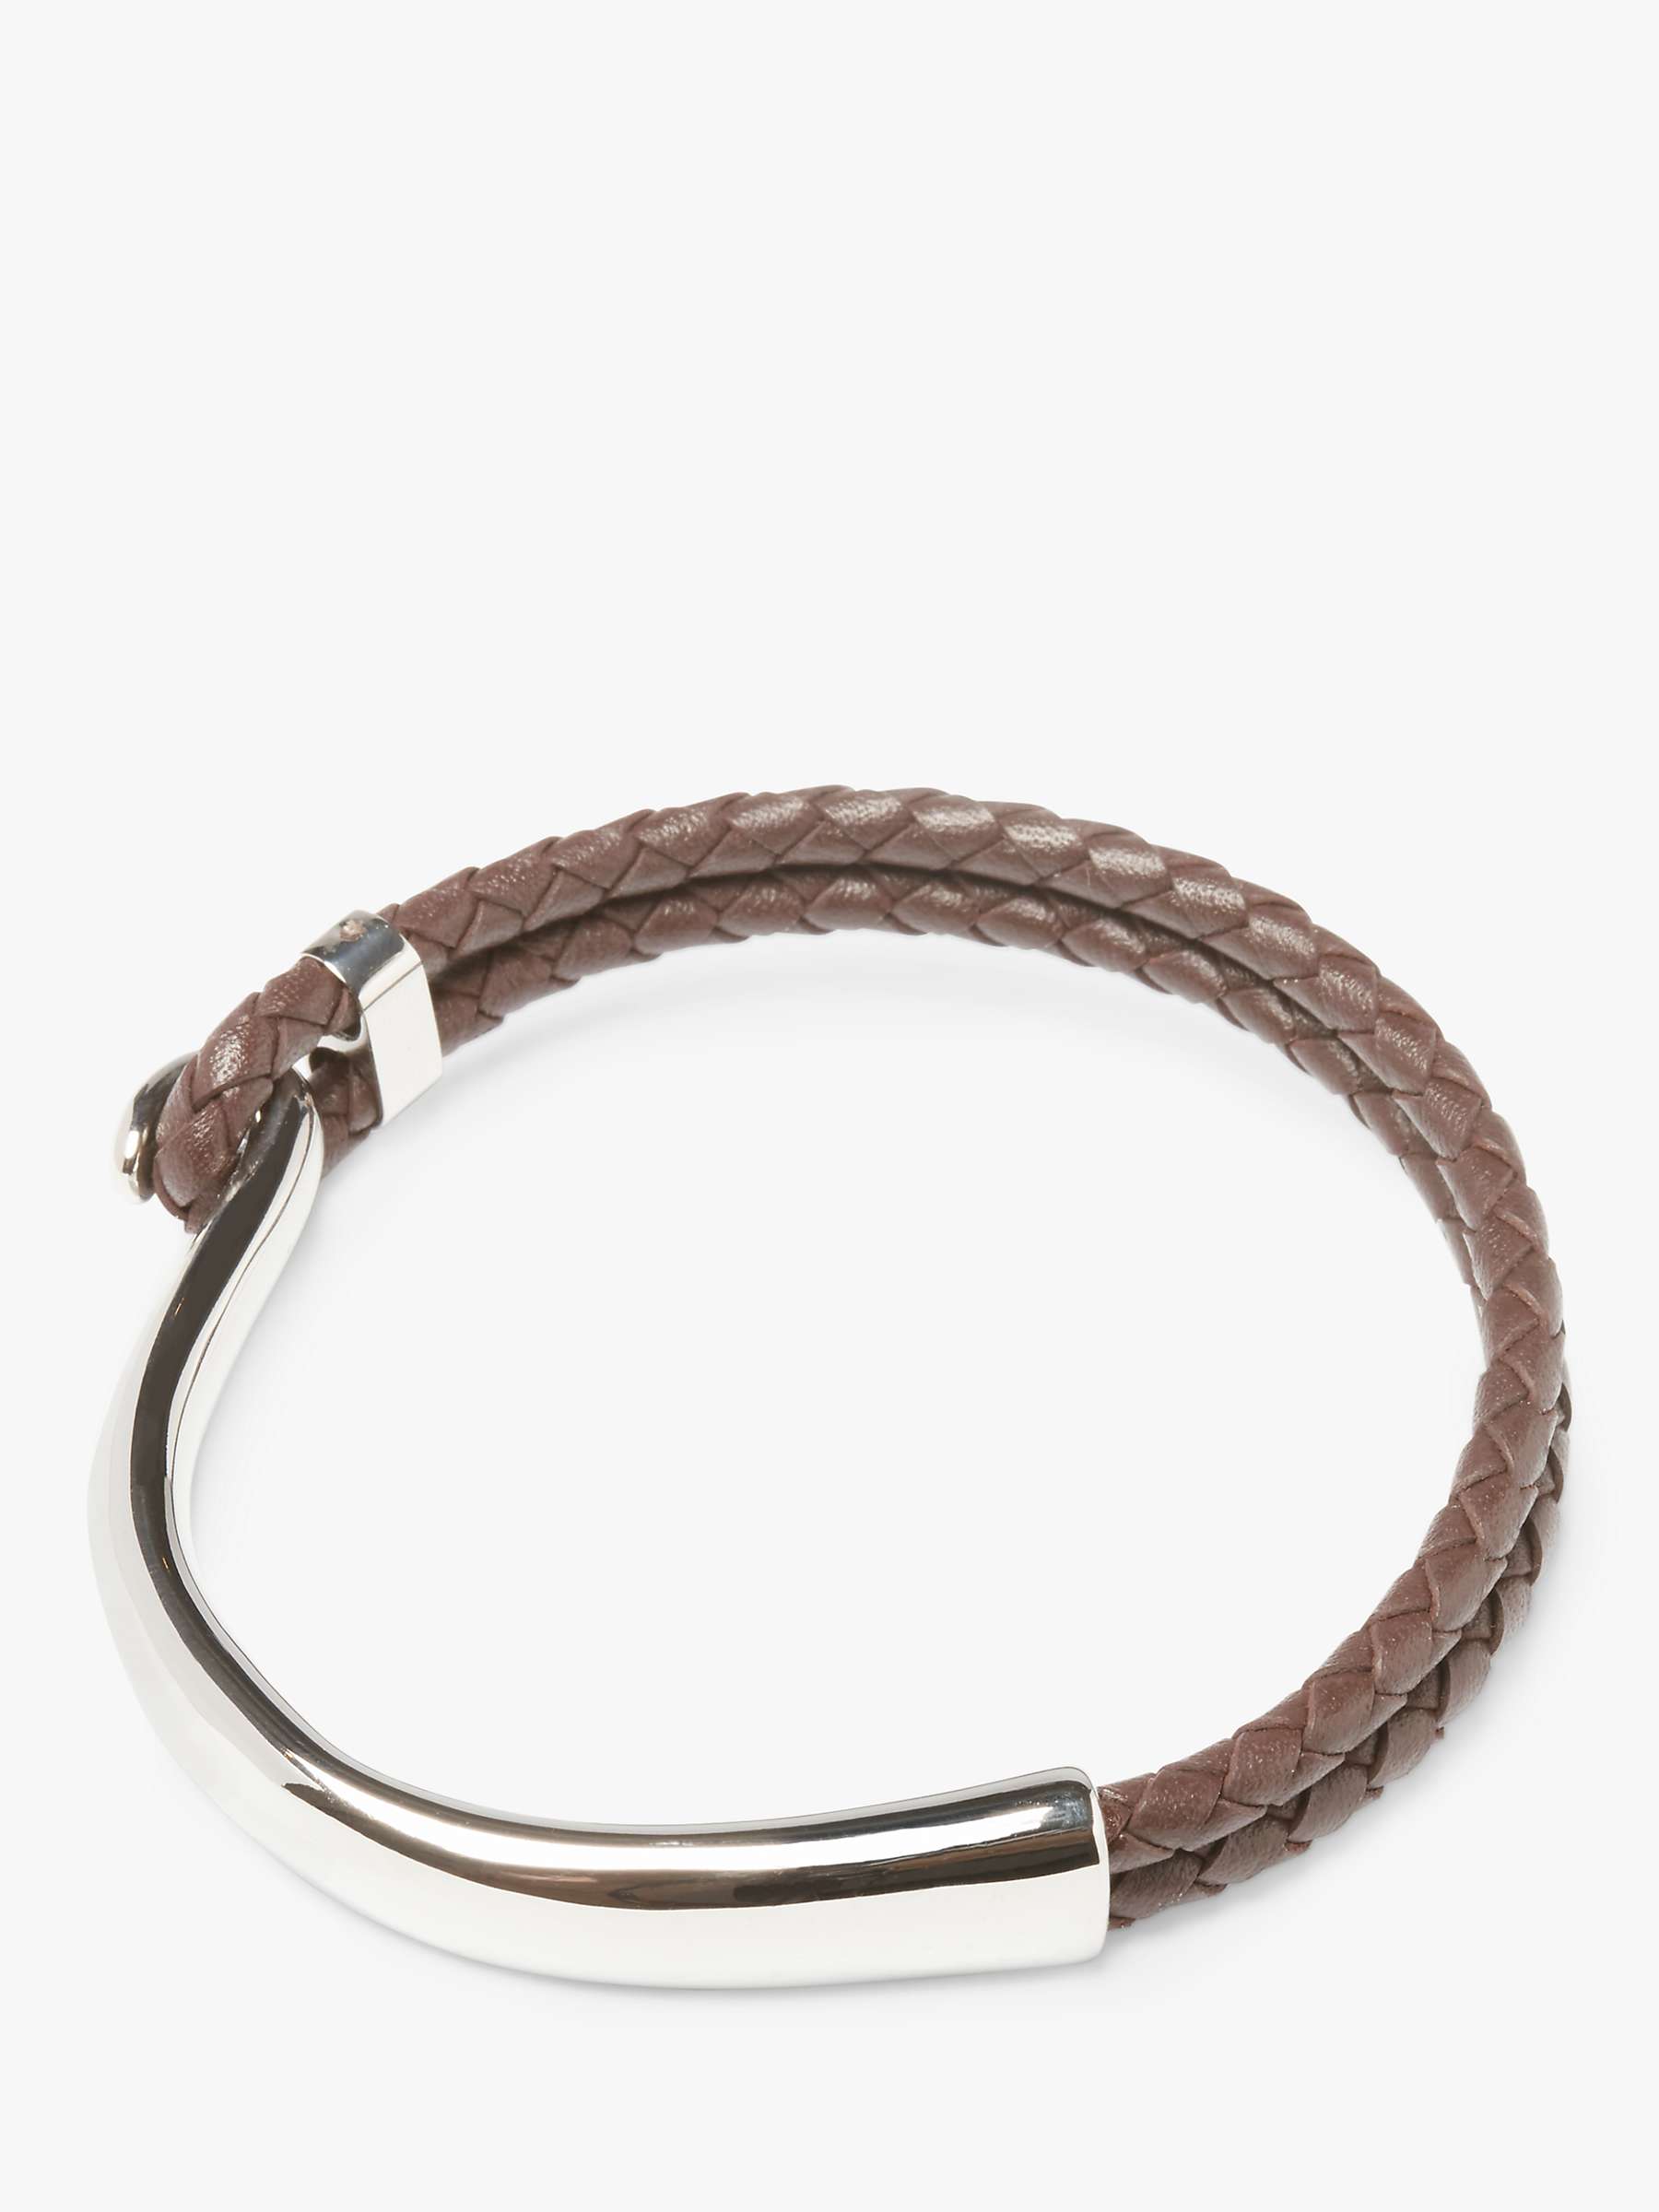 Buy Simon Carter Lizard Leather Stainless Steel Bracelet, Brown Online at johnlewis.com